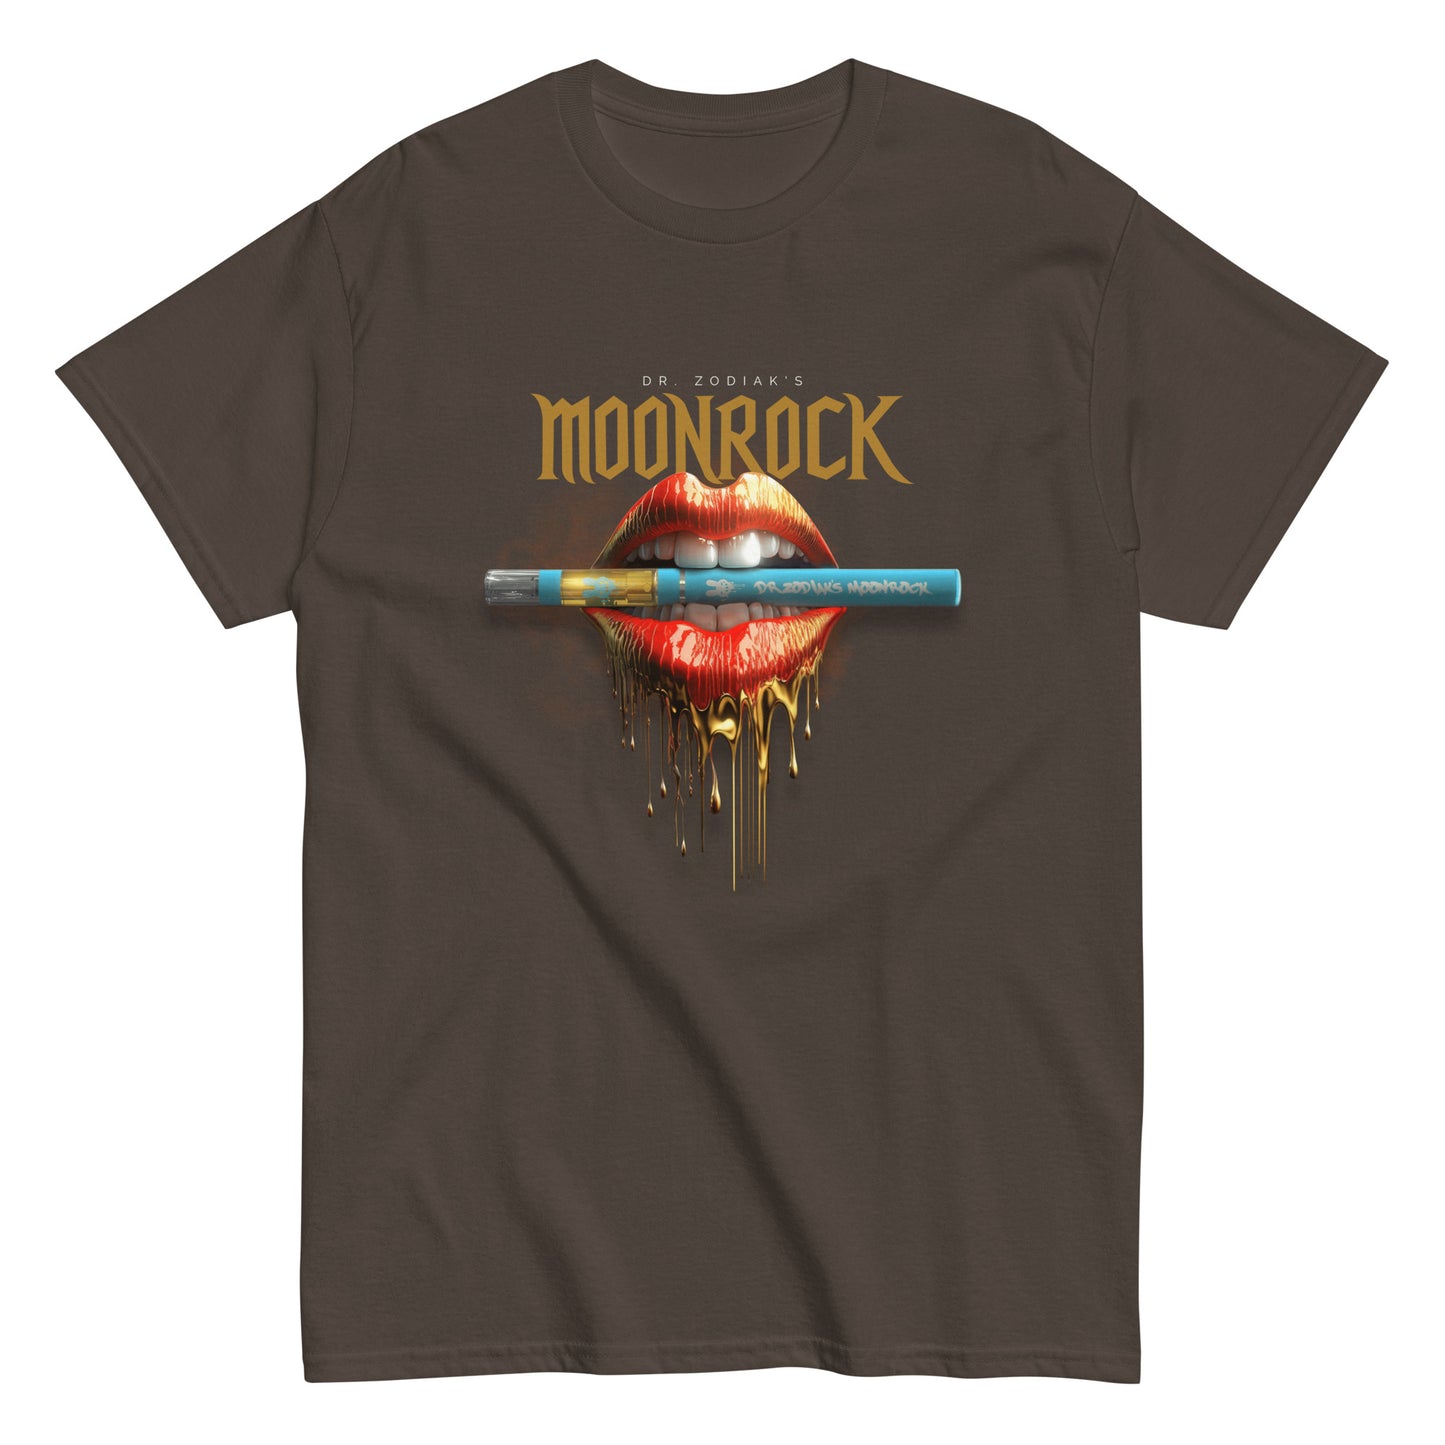 Moonrock Drip Tee by Dr. Zodiak's Moonrock